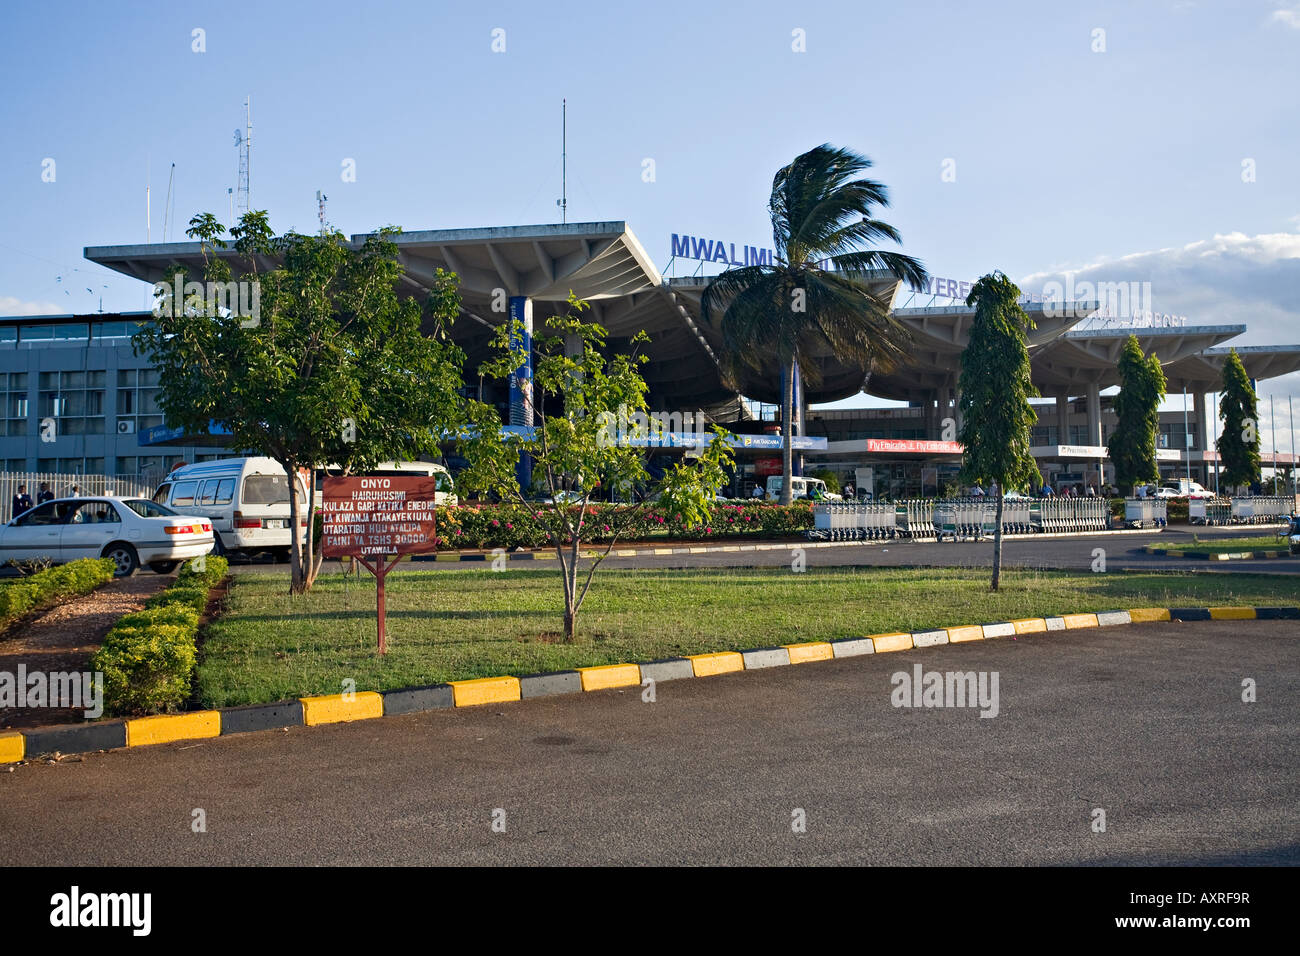 Tazara Aeroporto Internazionale di Dar es Salaam, Tanzania Africa Foto Stock